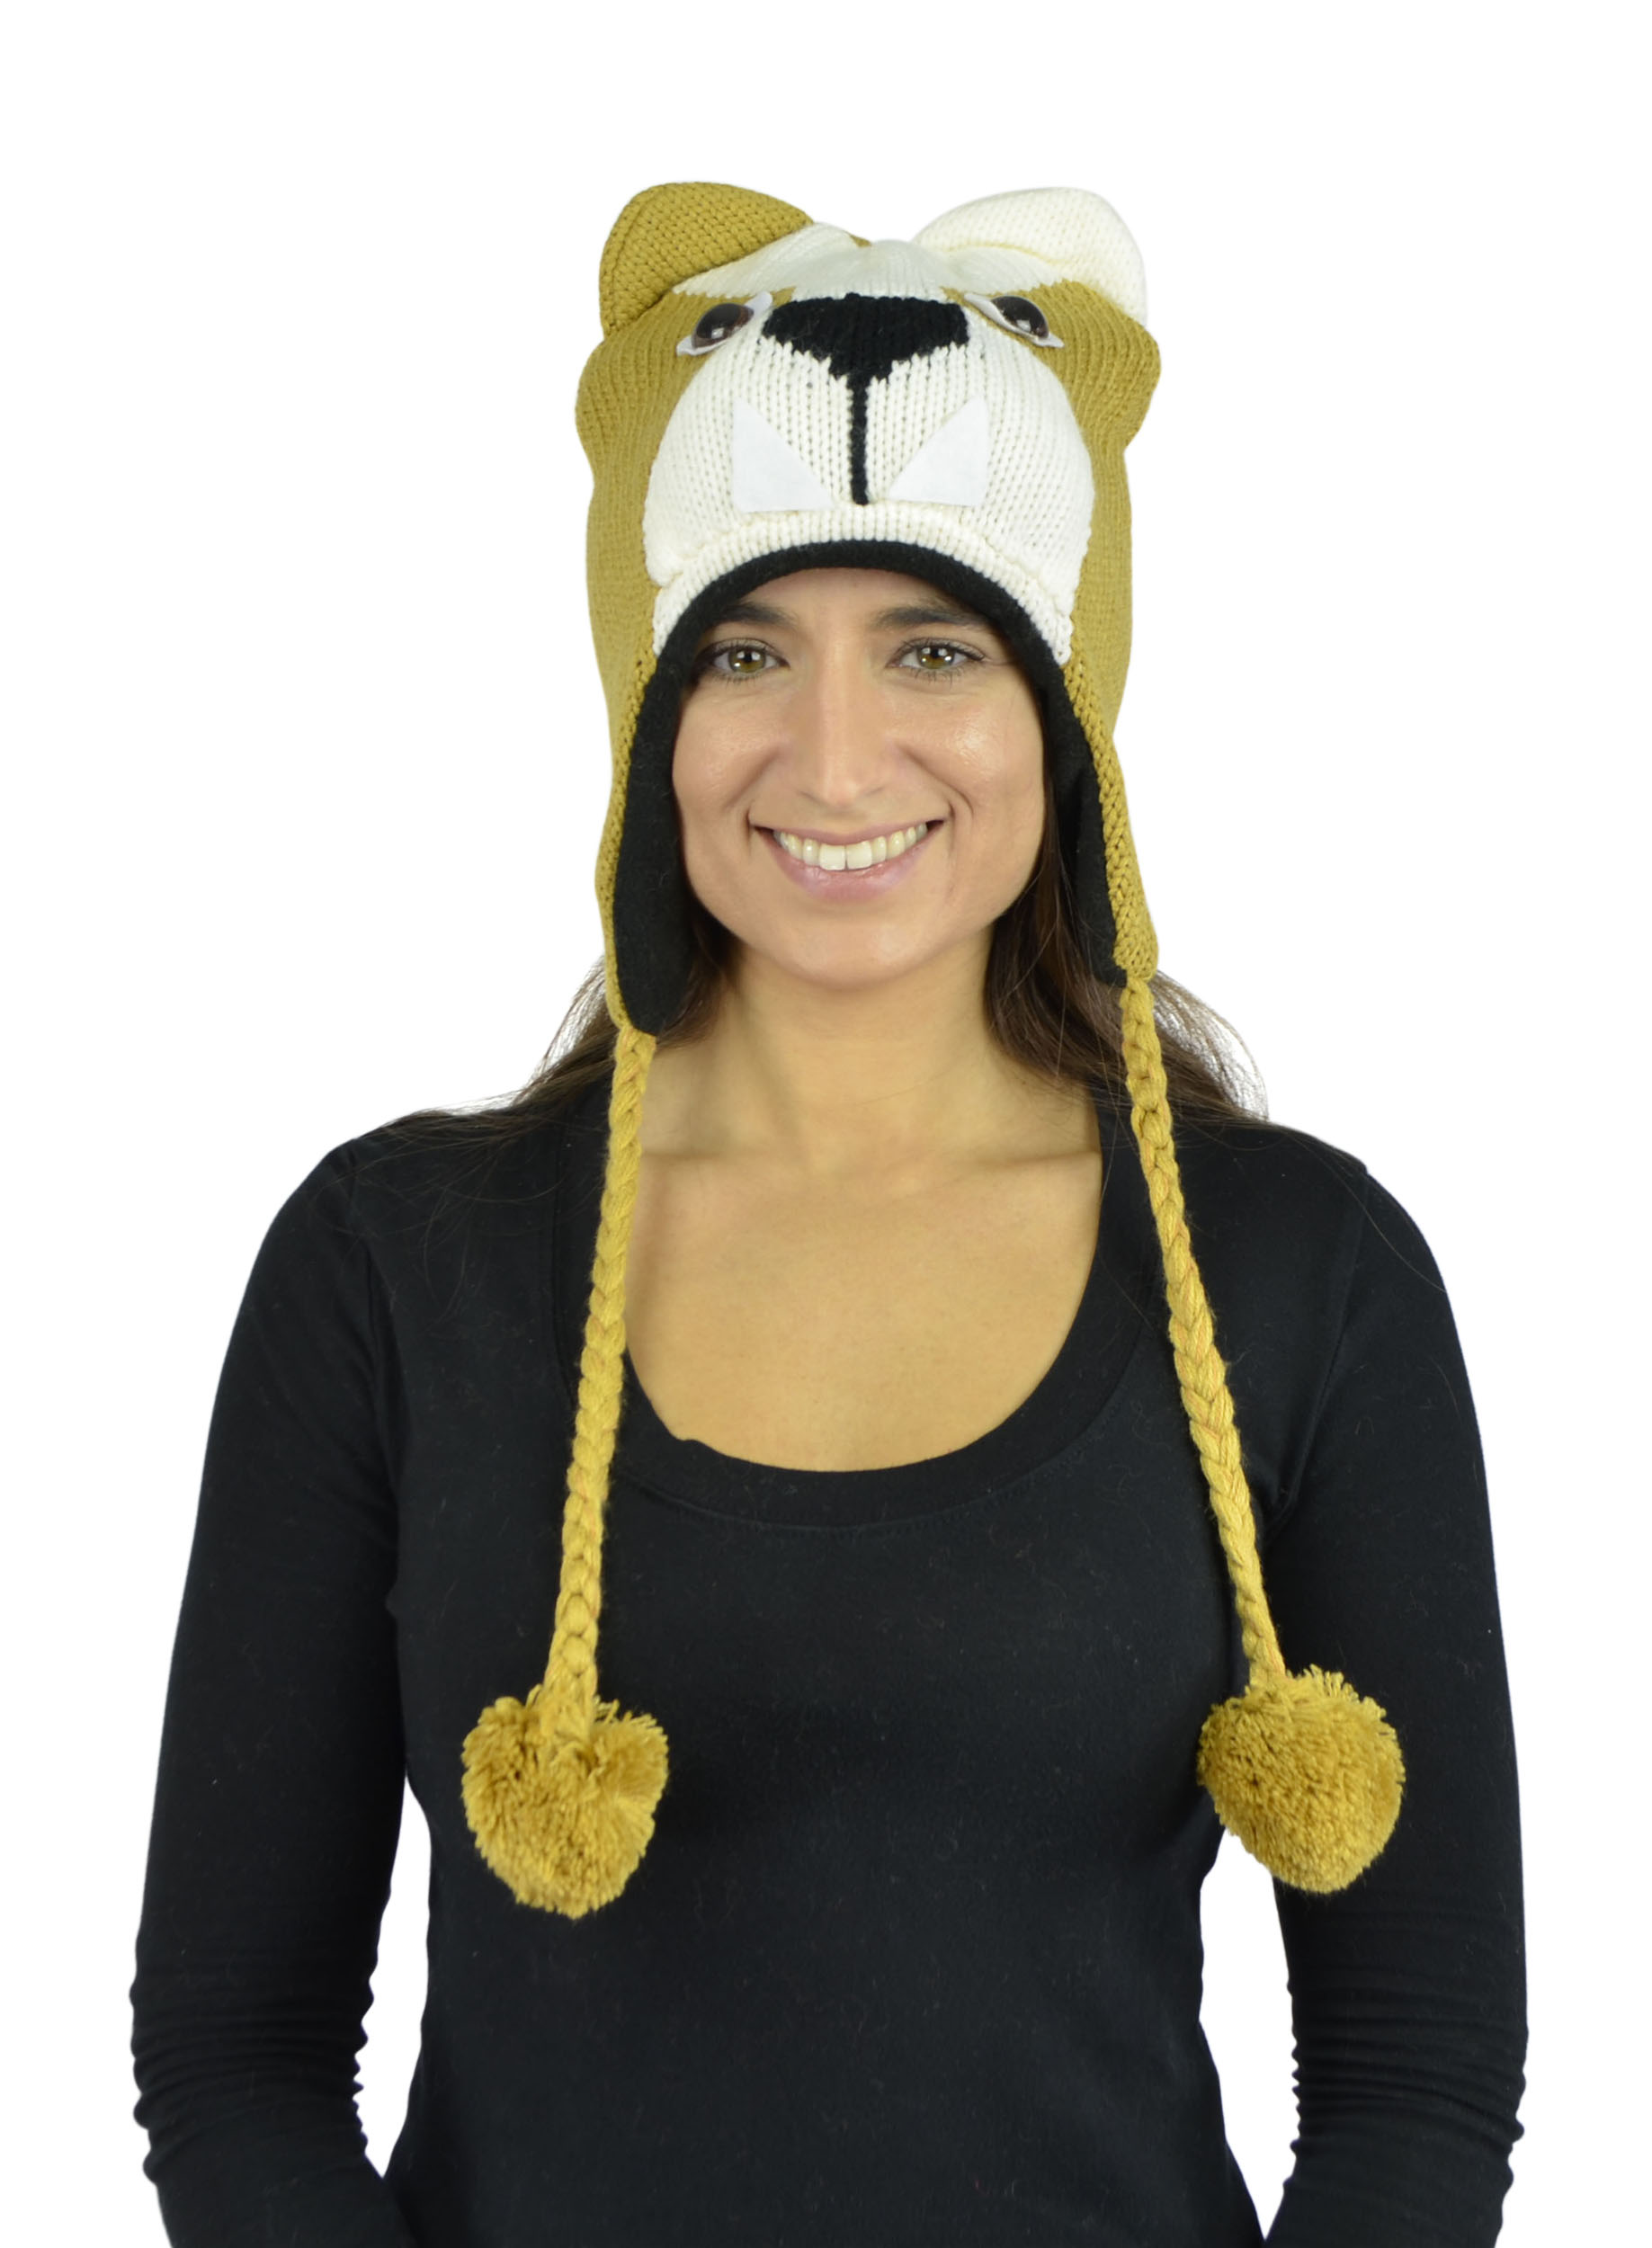 Belle Donne - Unisex Winter Knit Puppy Animal Hats With Pom Pom - Mustard